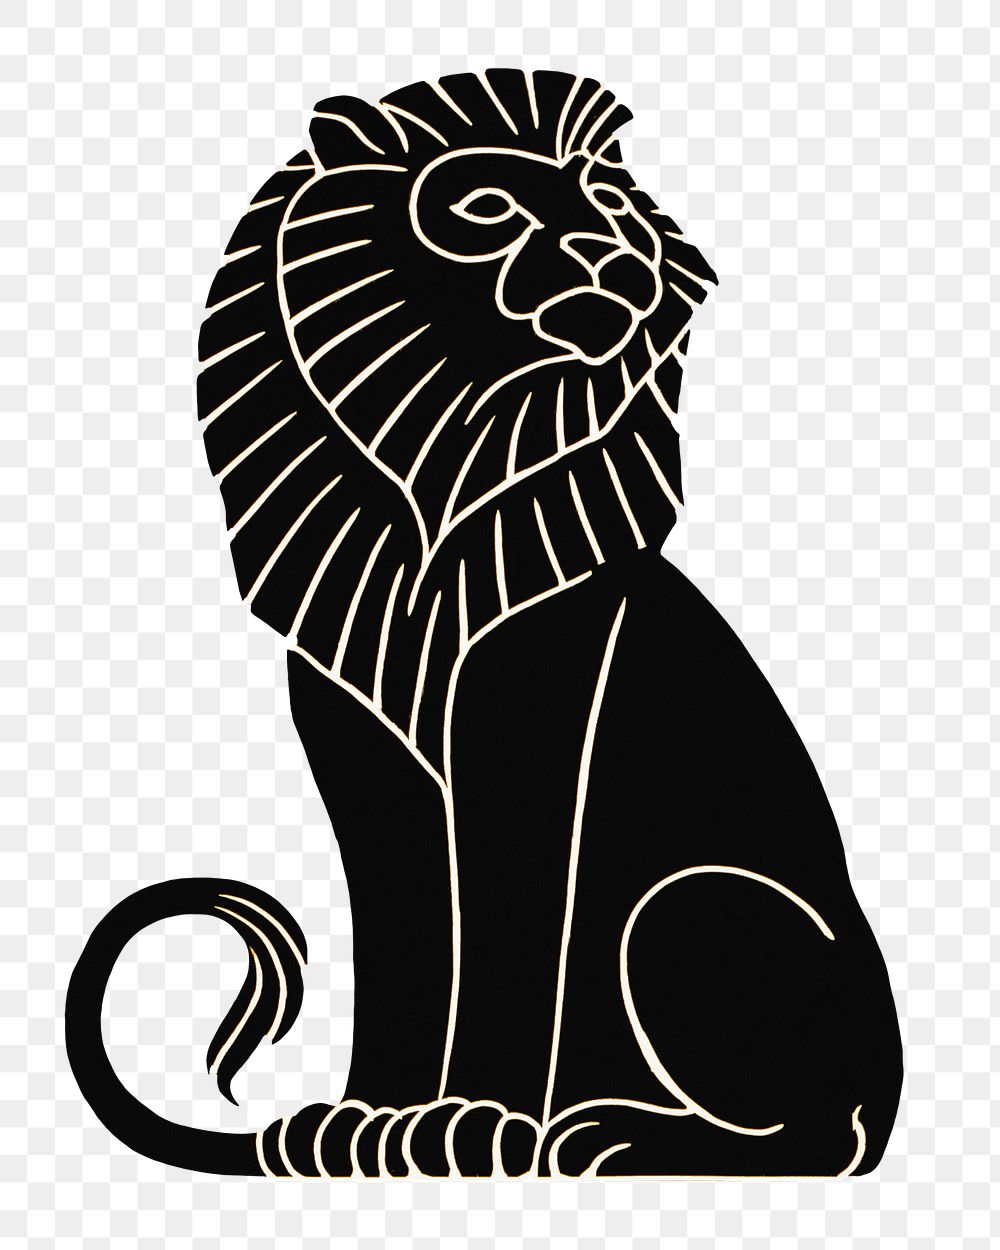 Black lion png animal illustration, transparent background.  Remastered by rawpixel